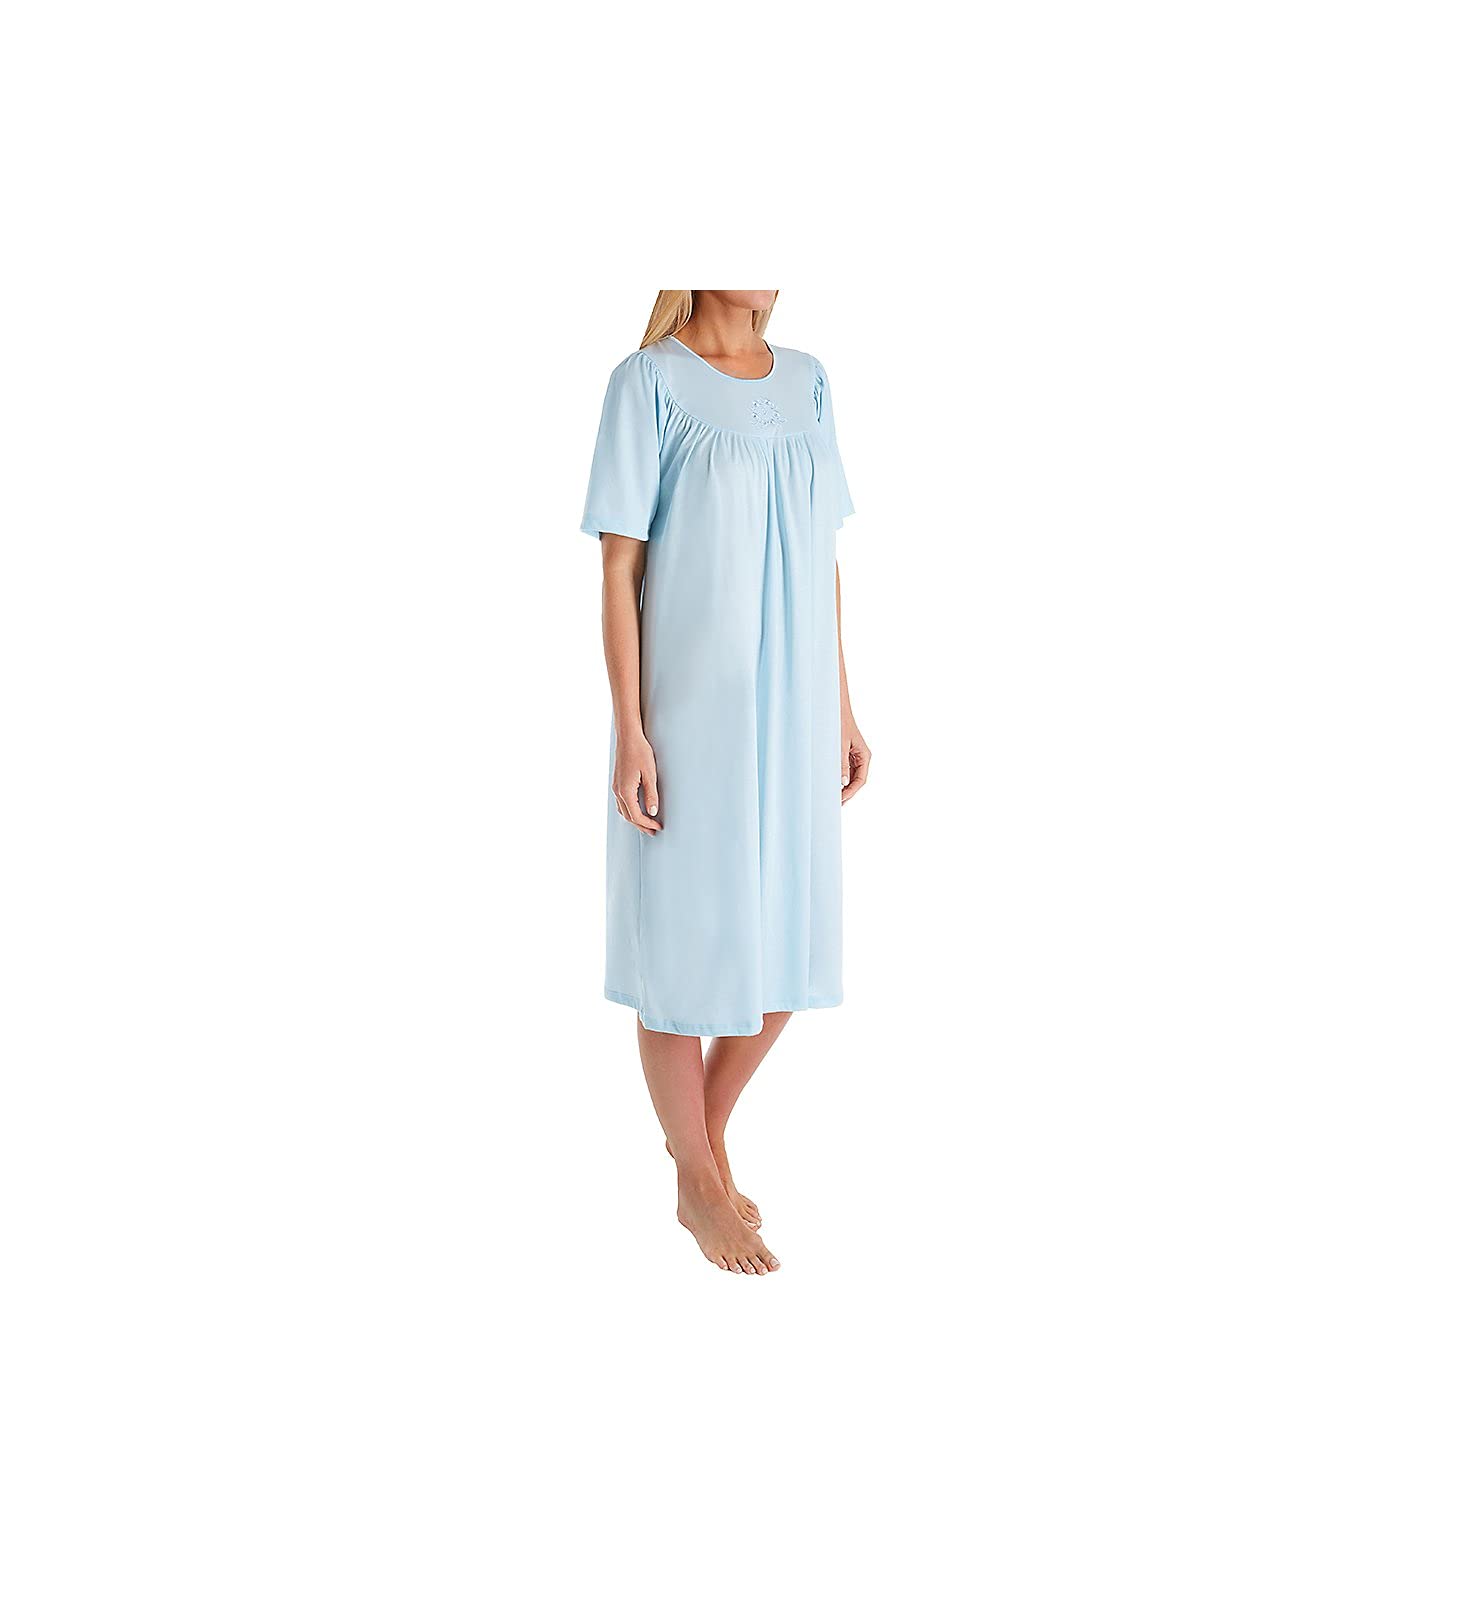 Calida Women's Soft Cotton Short Sleeve Nightgown 34000, Light Blue, M